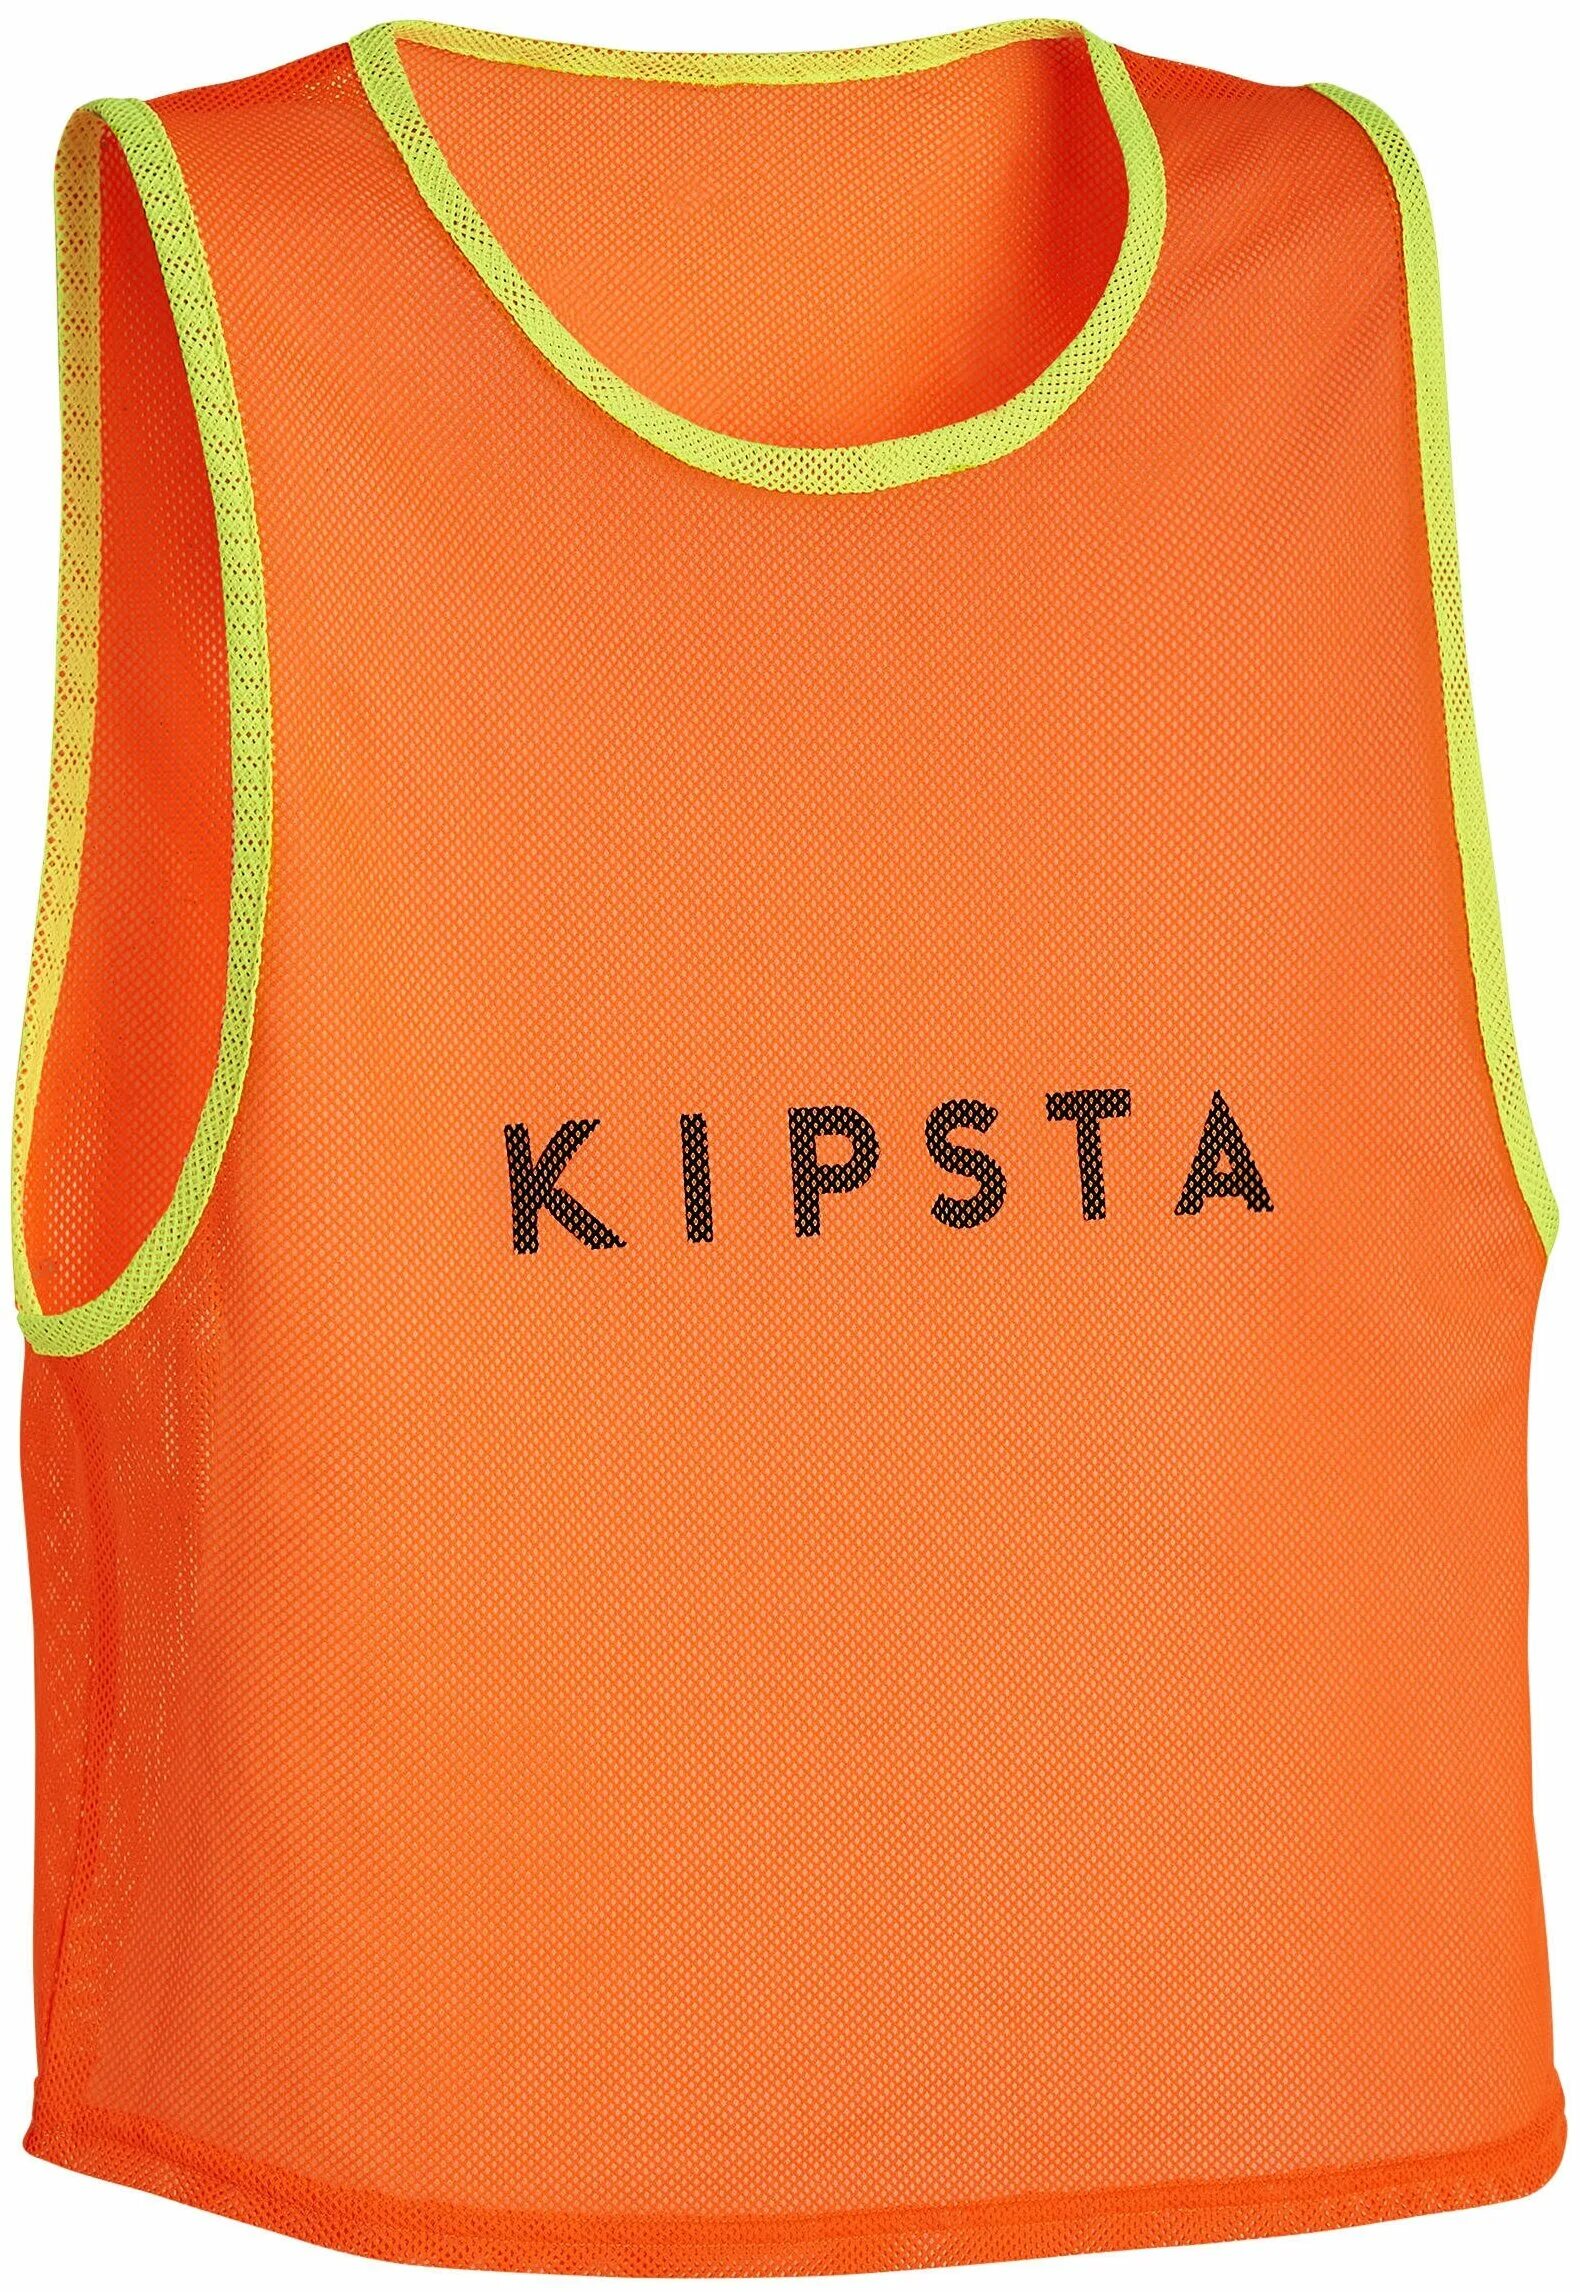 Манишка для футбола. Манишка KIPSTA. Манишка спортивная KIPSTA. Манишка детская KIPSTA. Манишки футбольные KIPSTA оранжевые.